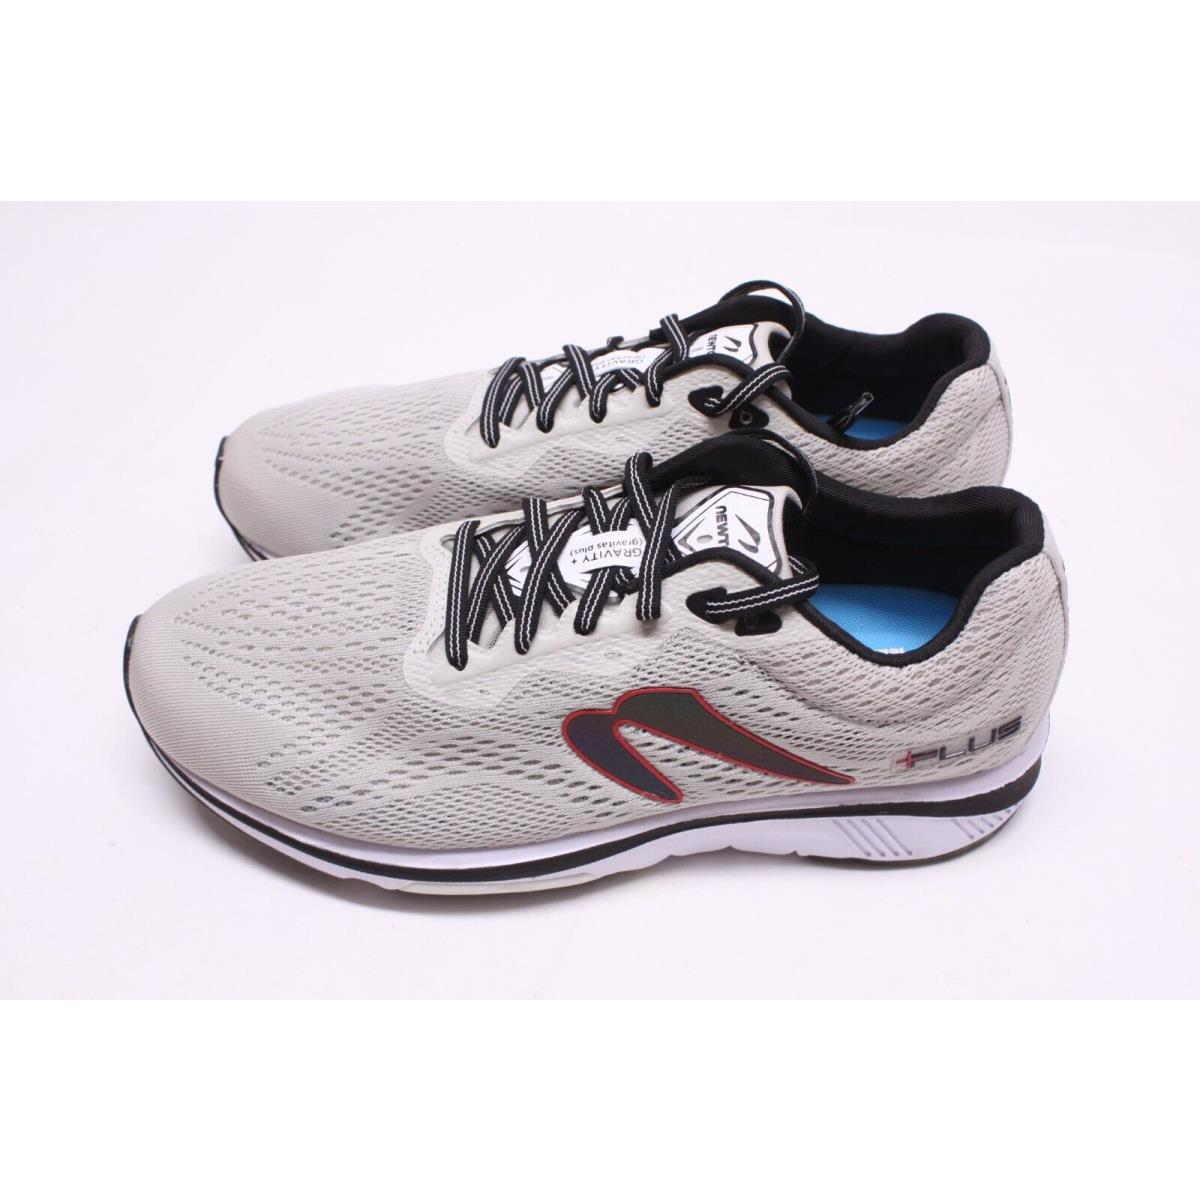 Newton Gravity + Men`s Running Shoes Size 7.5 M000121X